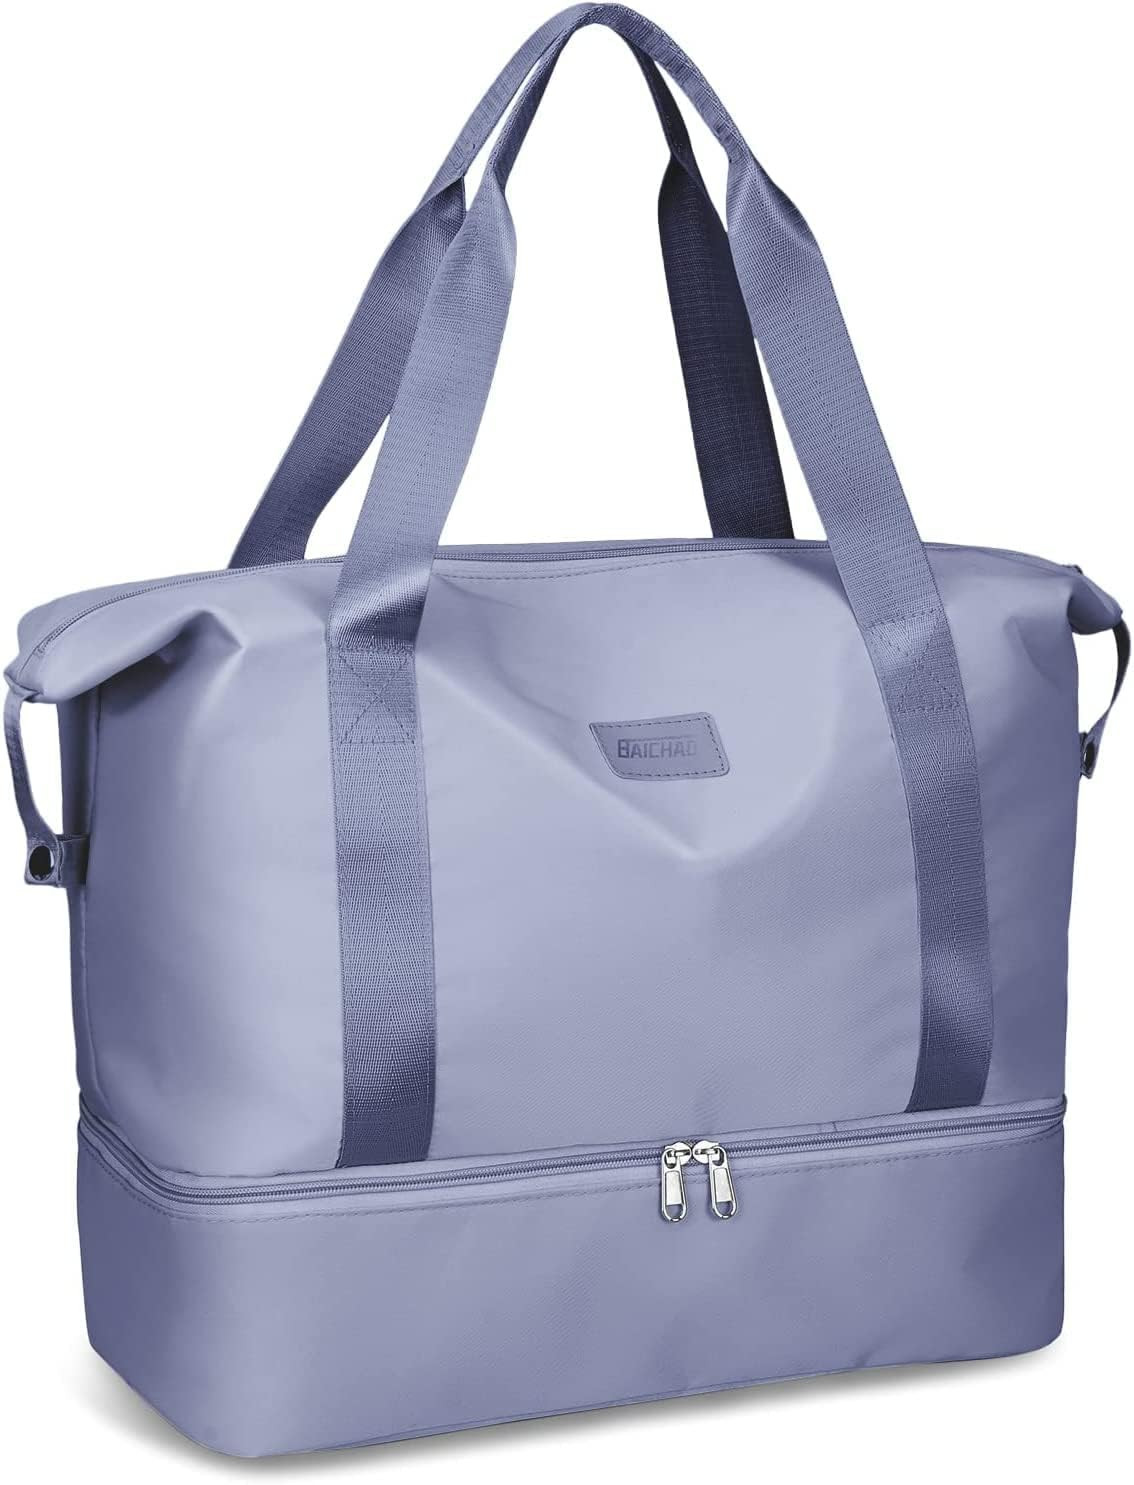 Fashion Women's Cute Travel Bag | Ladies luggage, Girls bags, Travel bag